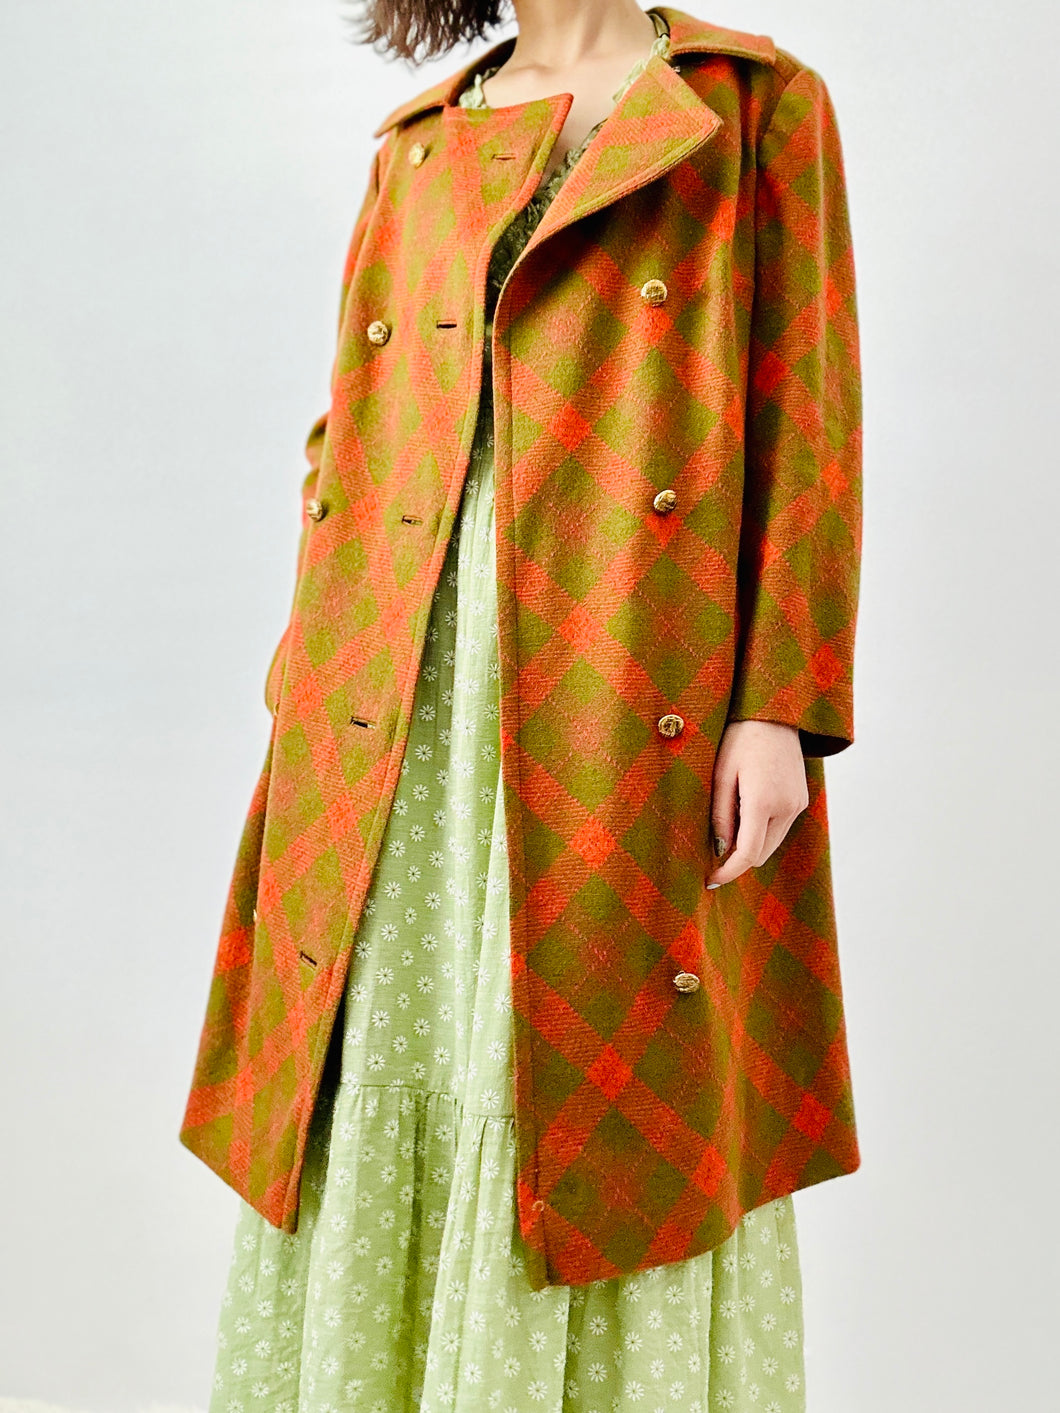 Vintage 1950s orange plaid dress coat